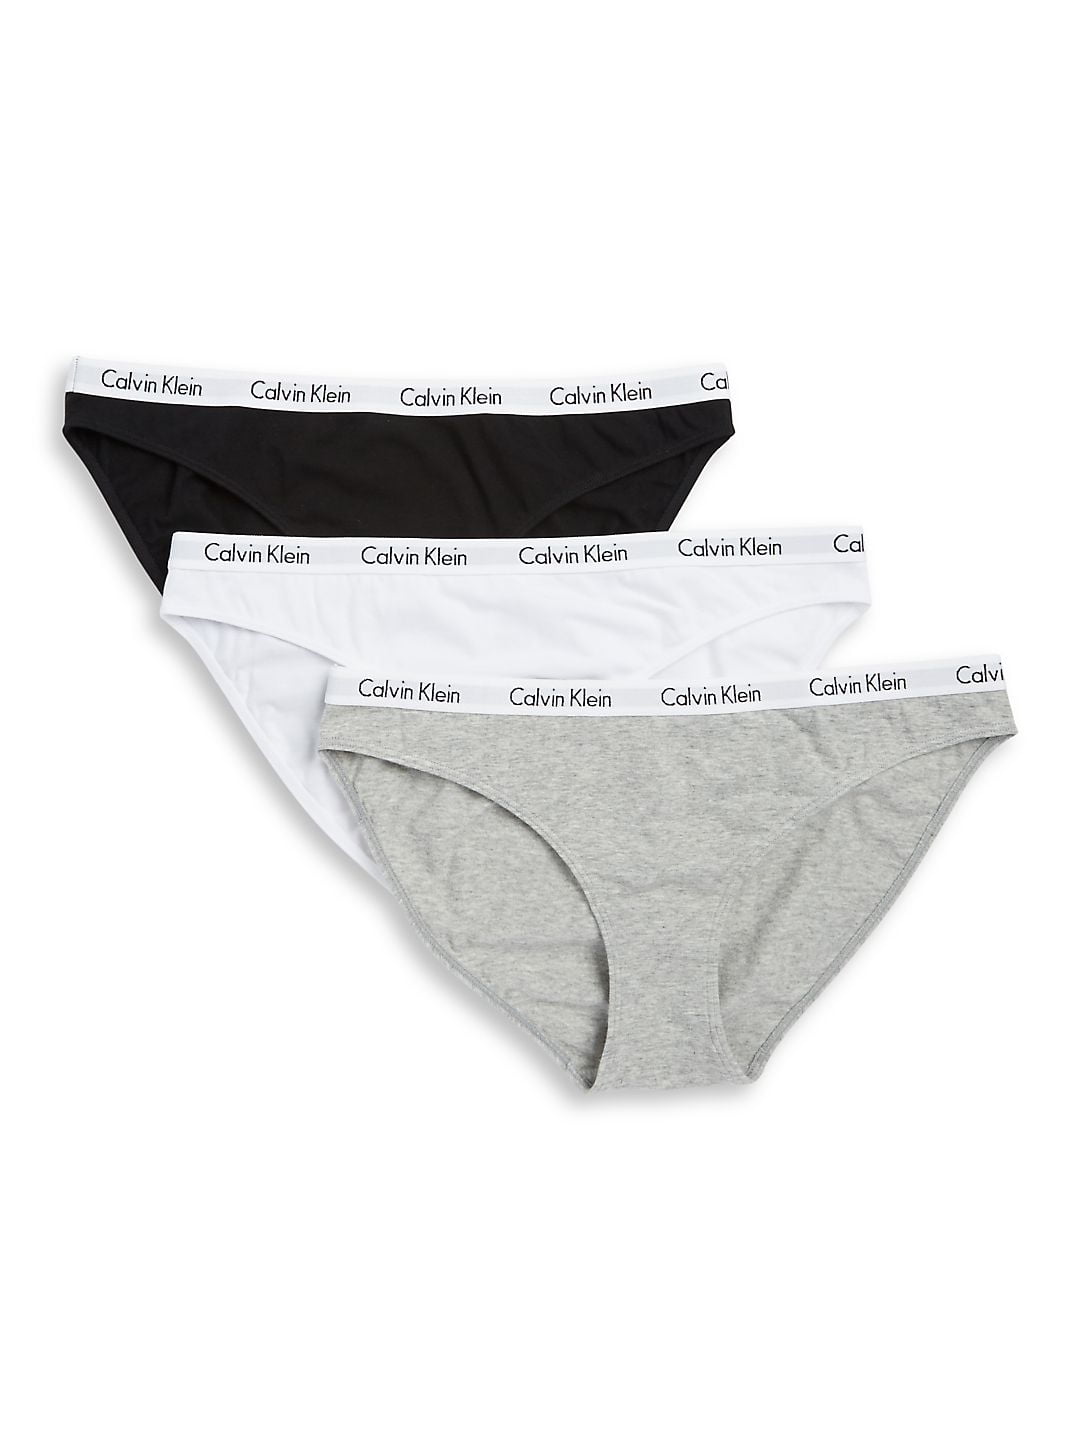 Calvin Klein Underwear Women's Carousel 3 Pack Panties, Multi, Small